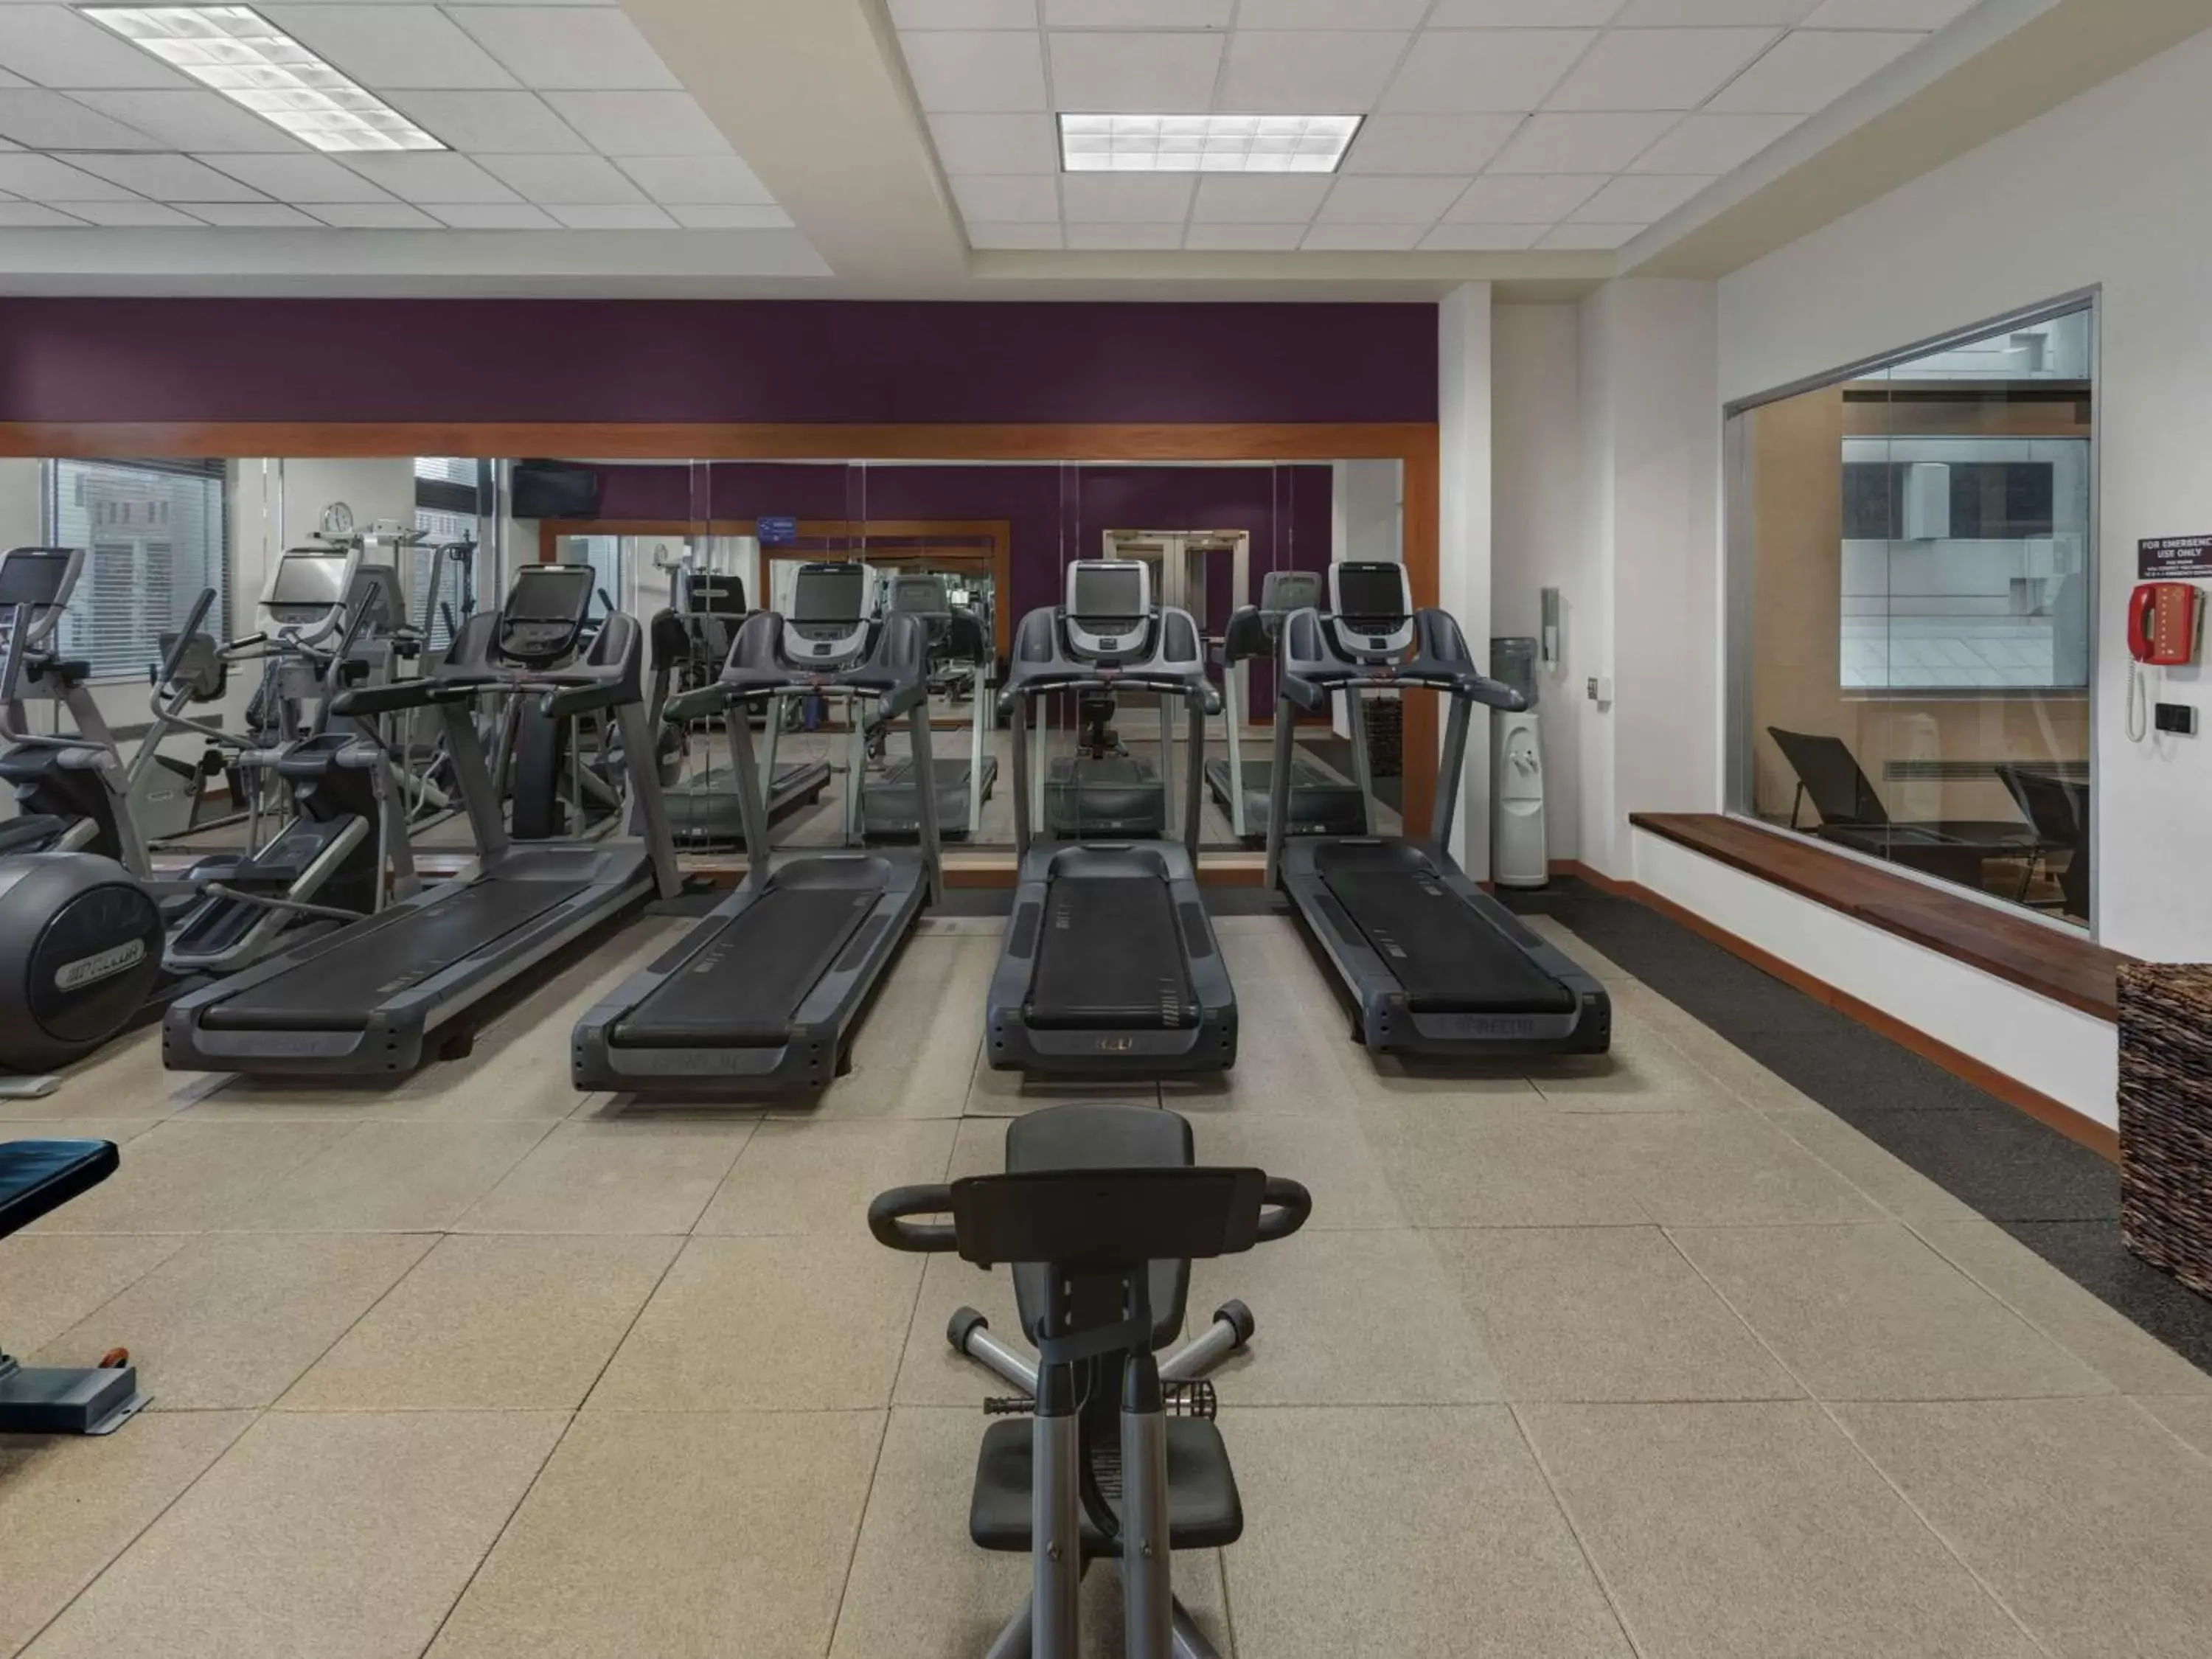 Fitness centre/facilities, Fitness Center/Facilities in Hilton Harrisburg near Hershey Park